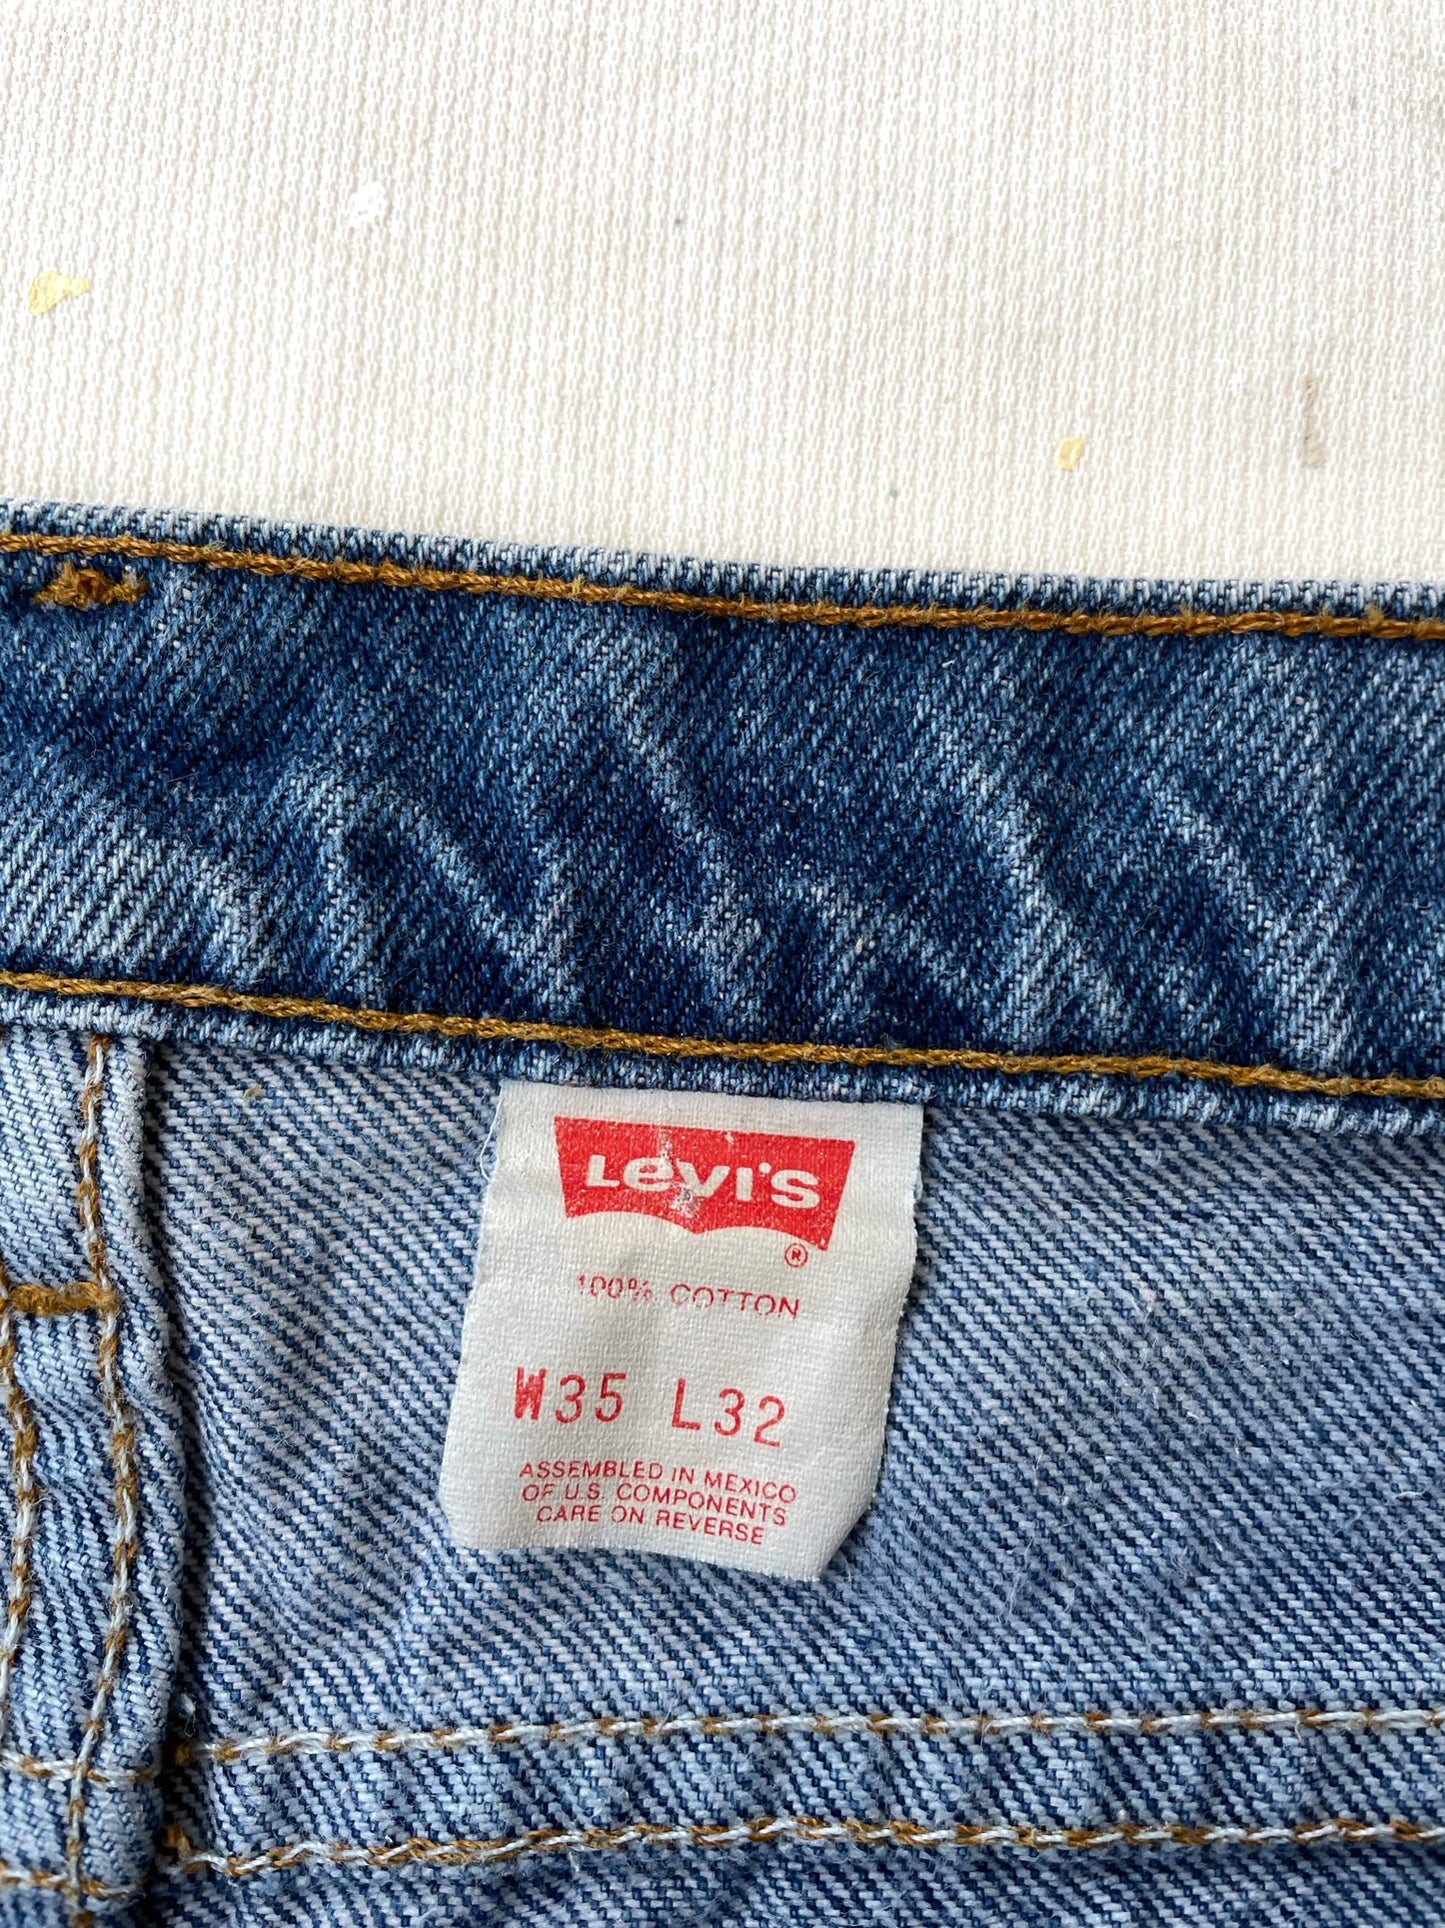 Levi's 506 Orange Tab Jeans—[34x32]